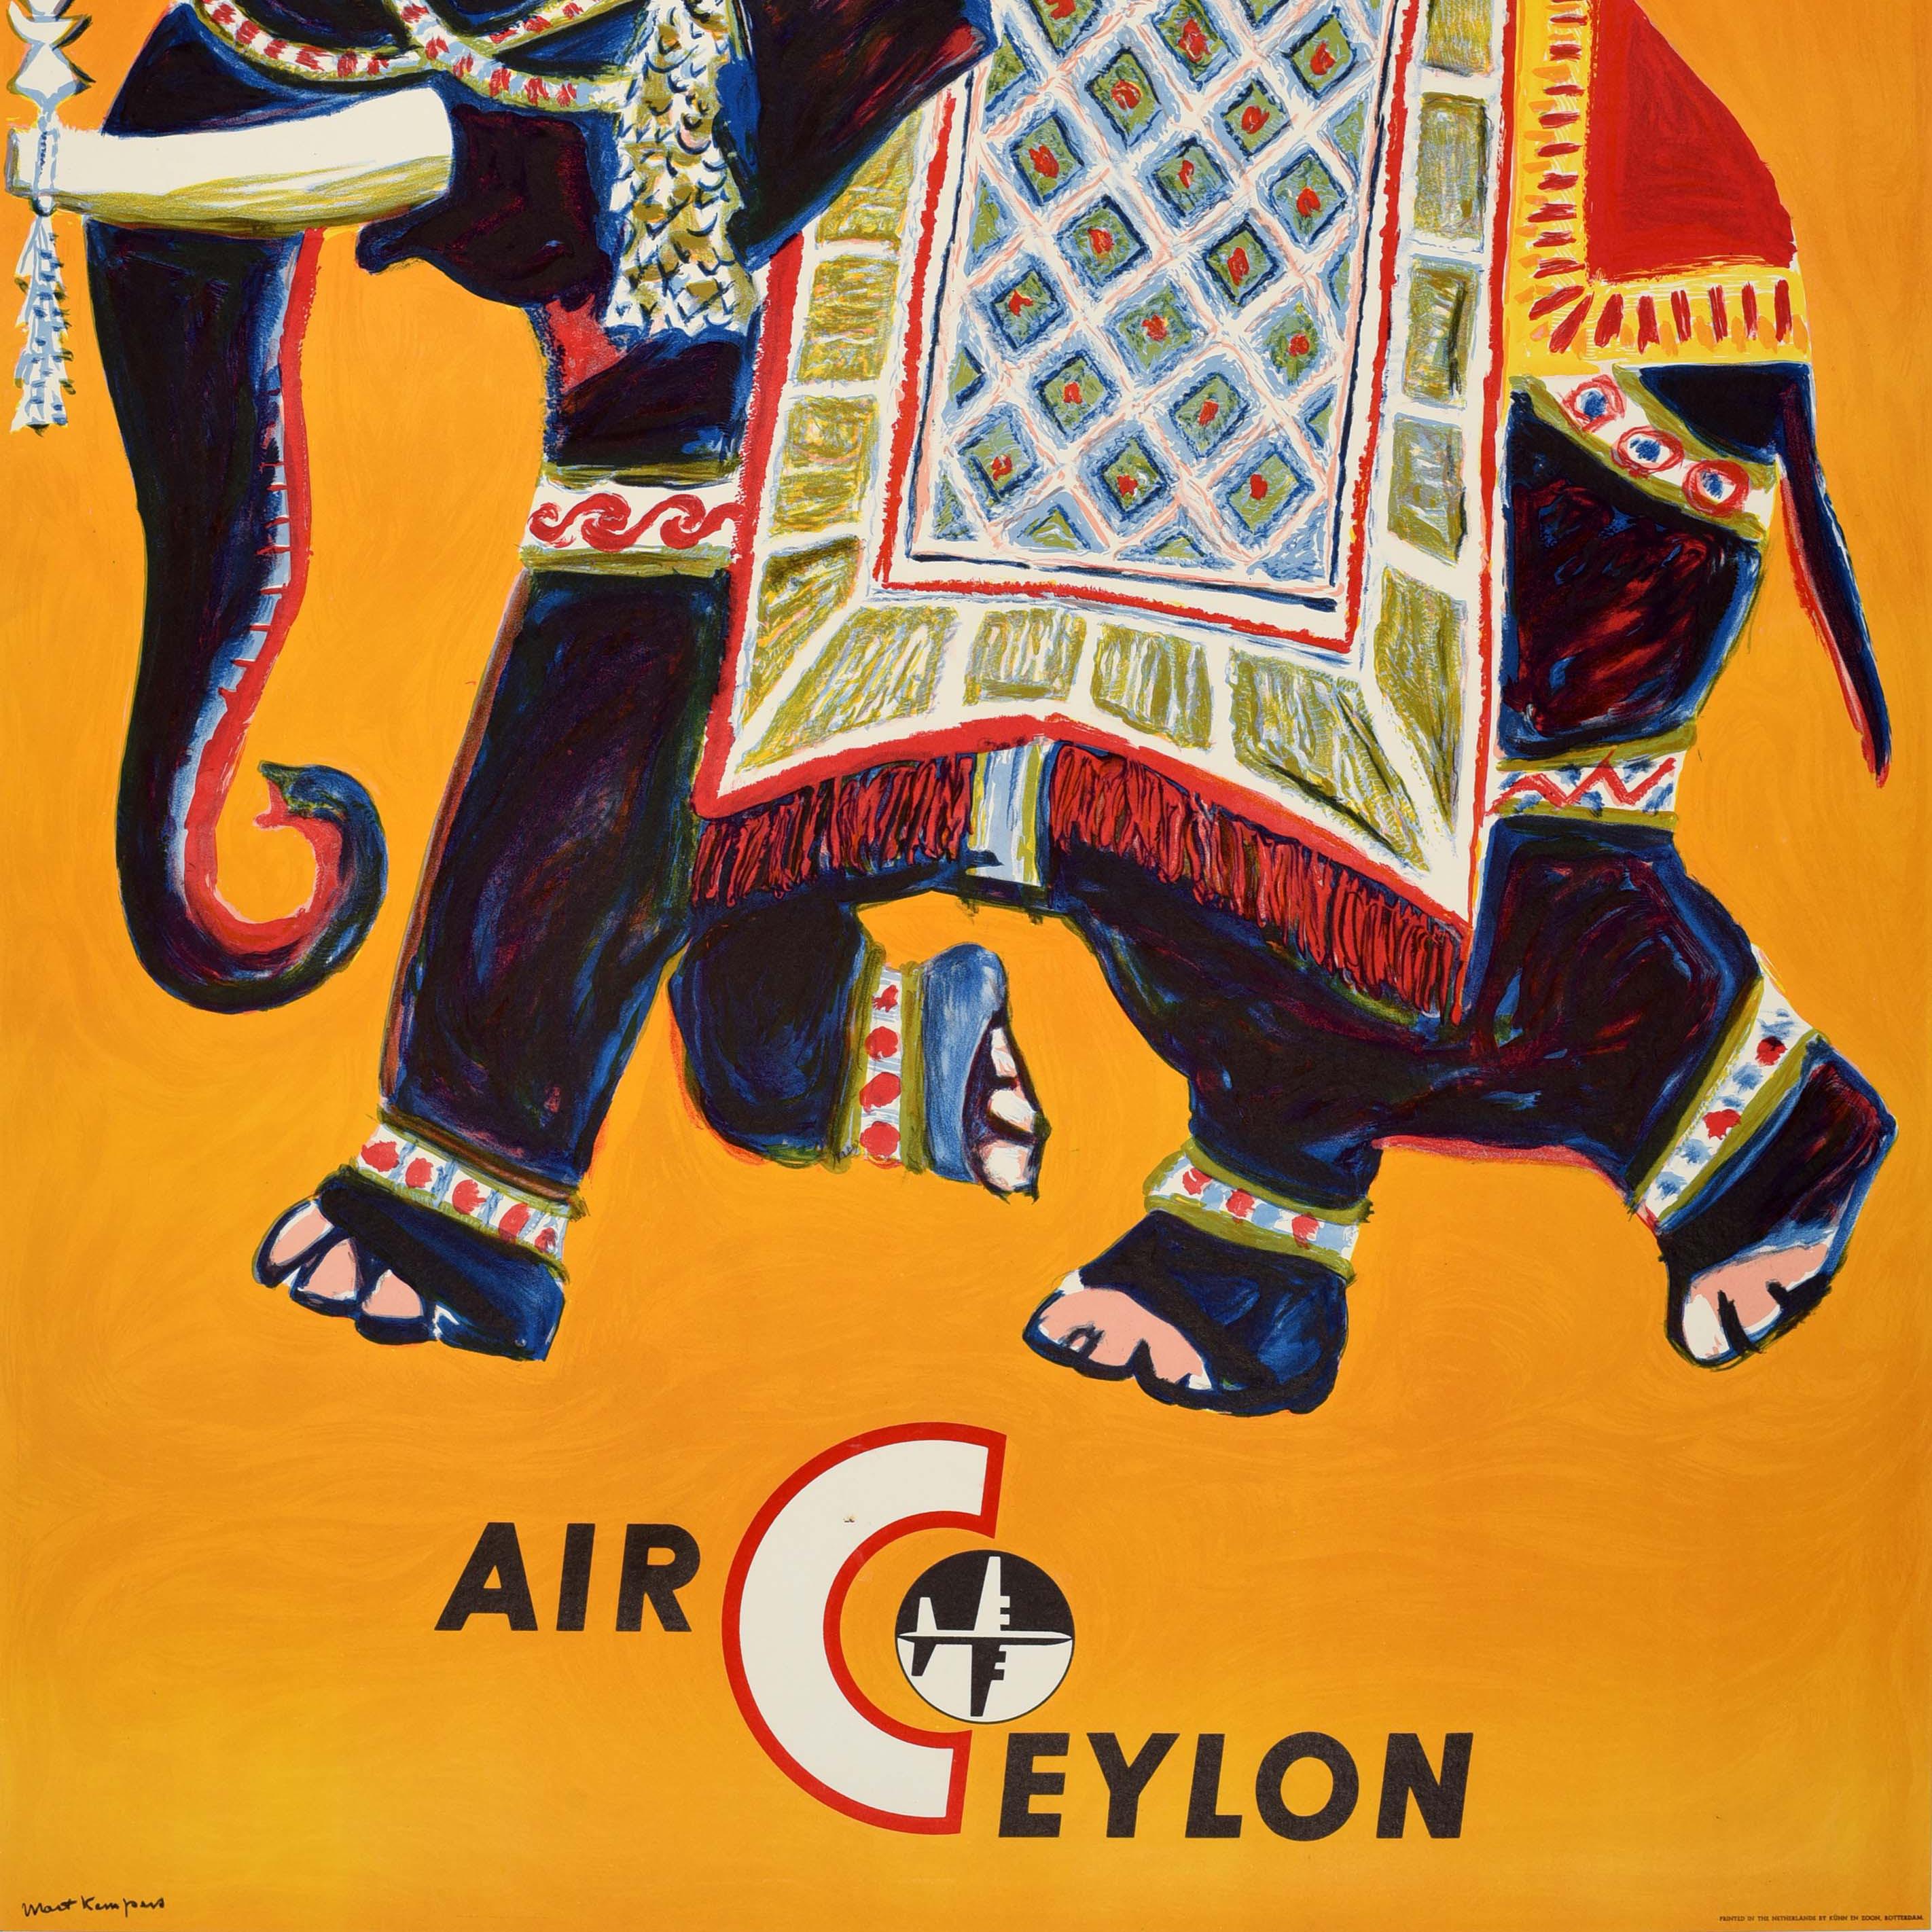 Original Vintage South Asia Travel Poster Air Ceylon Airline Sri Lanka Elephant For Sale 1